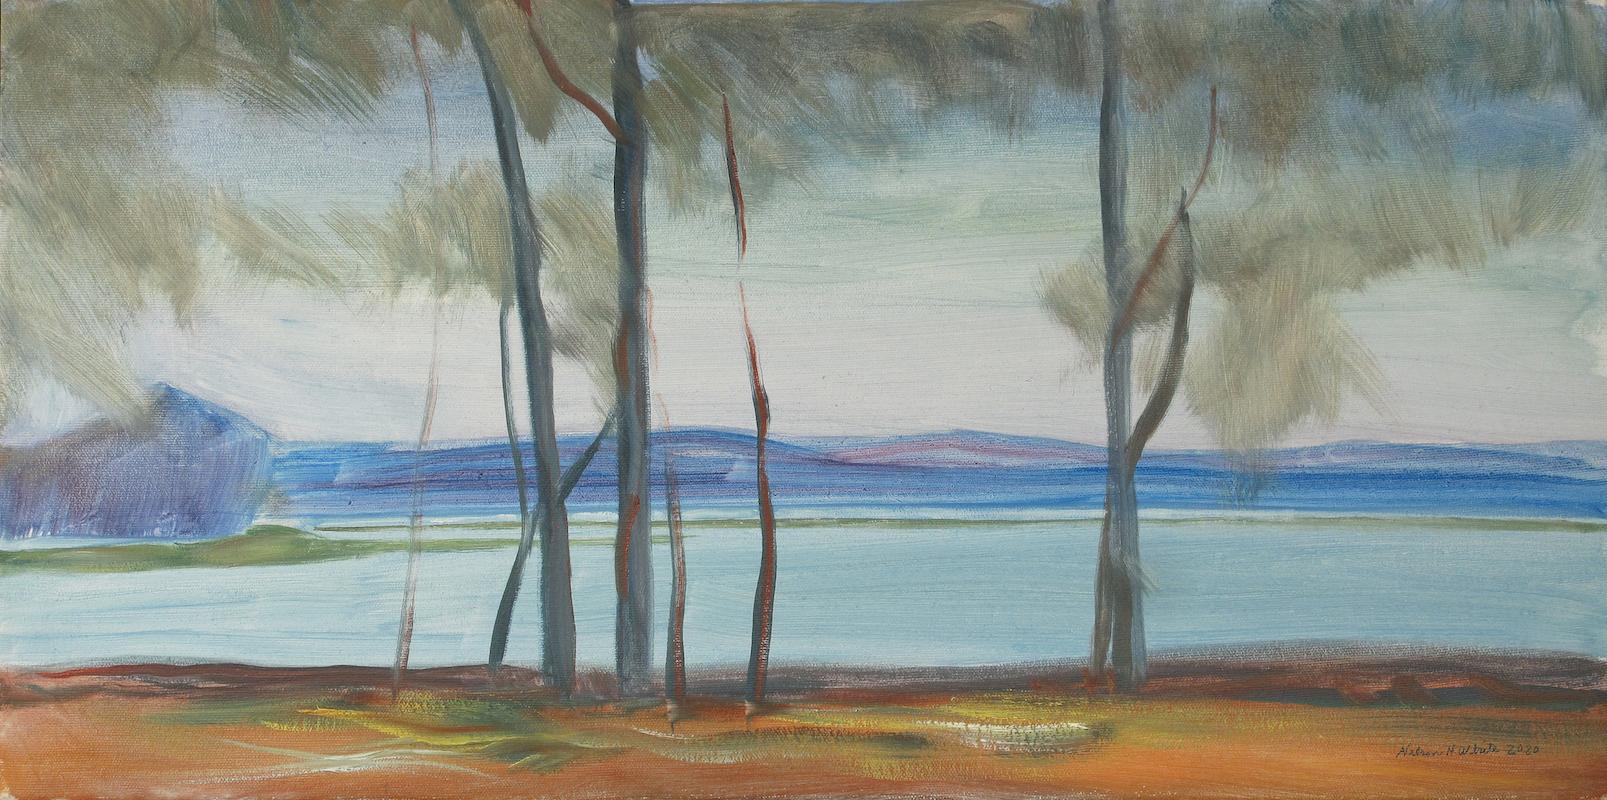 Nelson White Landscape Painting - The Creek Shelter Island 09.20.2020